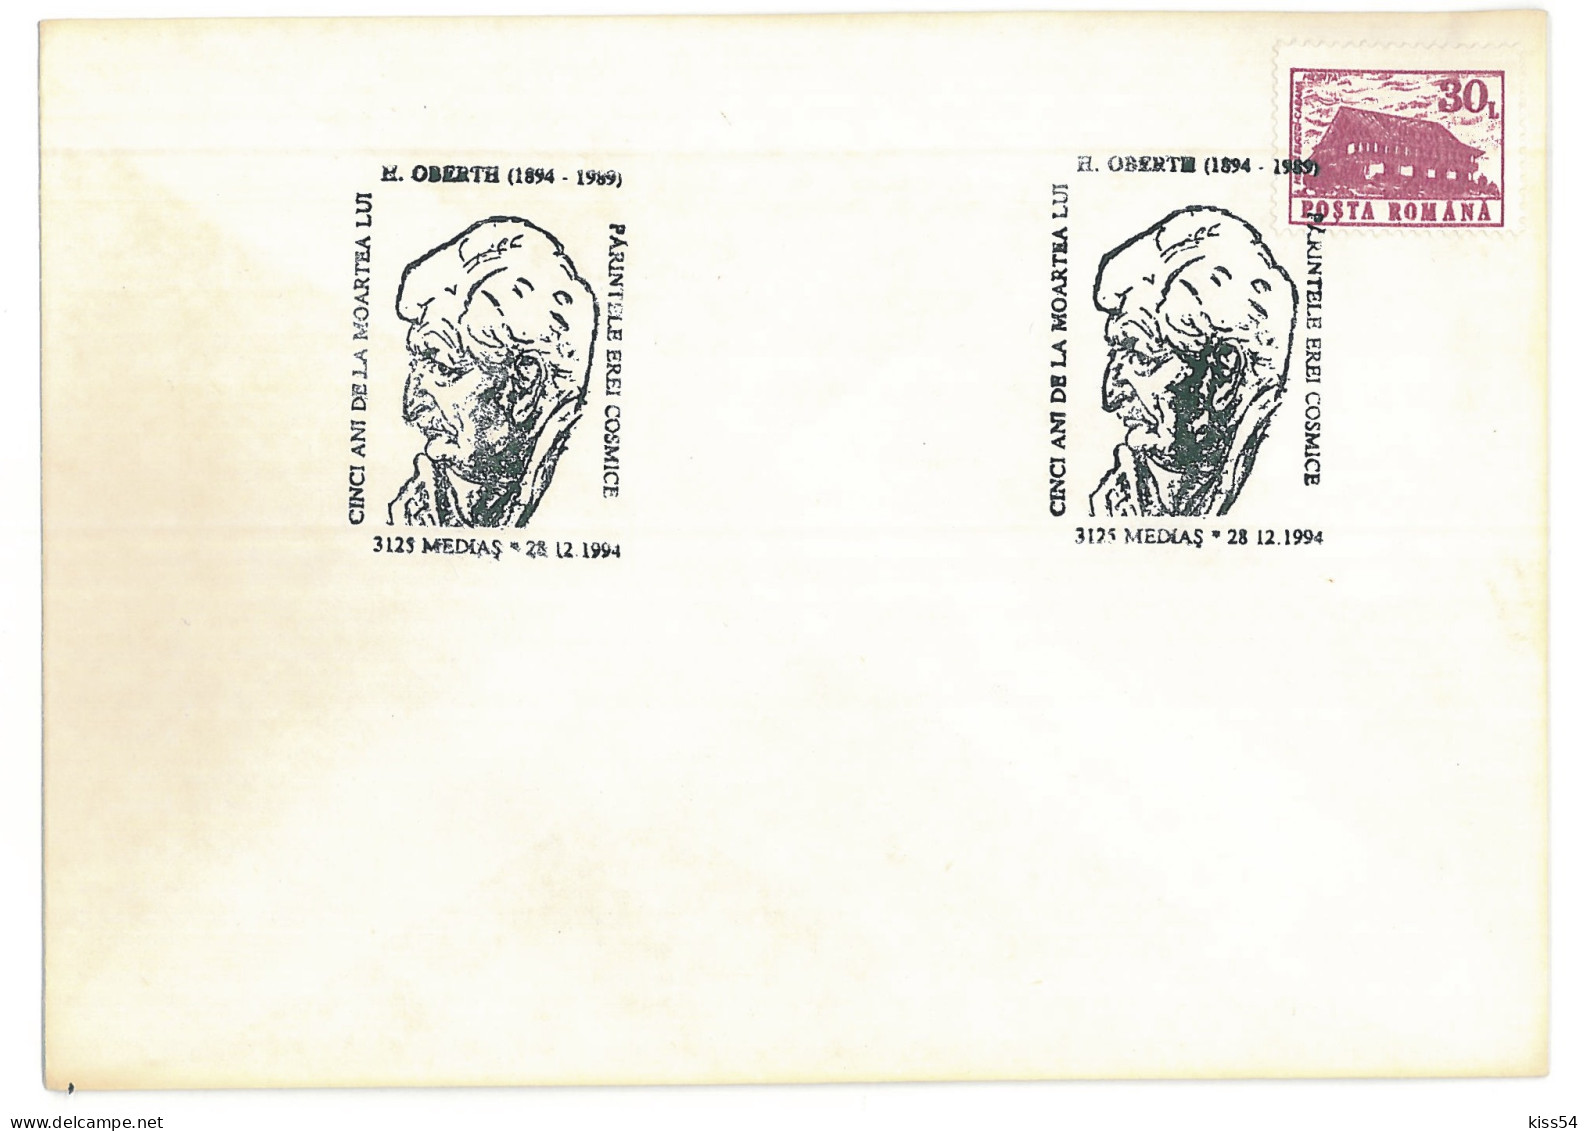 COV 61 - 400 Hermann OBERTH, Romania - Cover - Used - 1994 - Briefe U. Dokumente